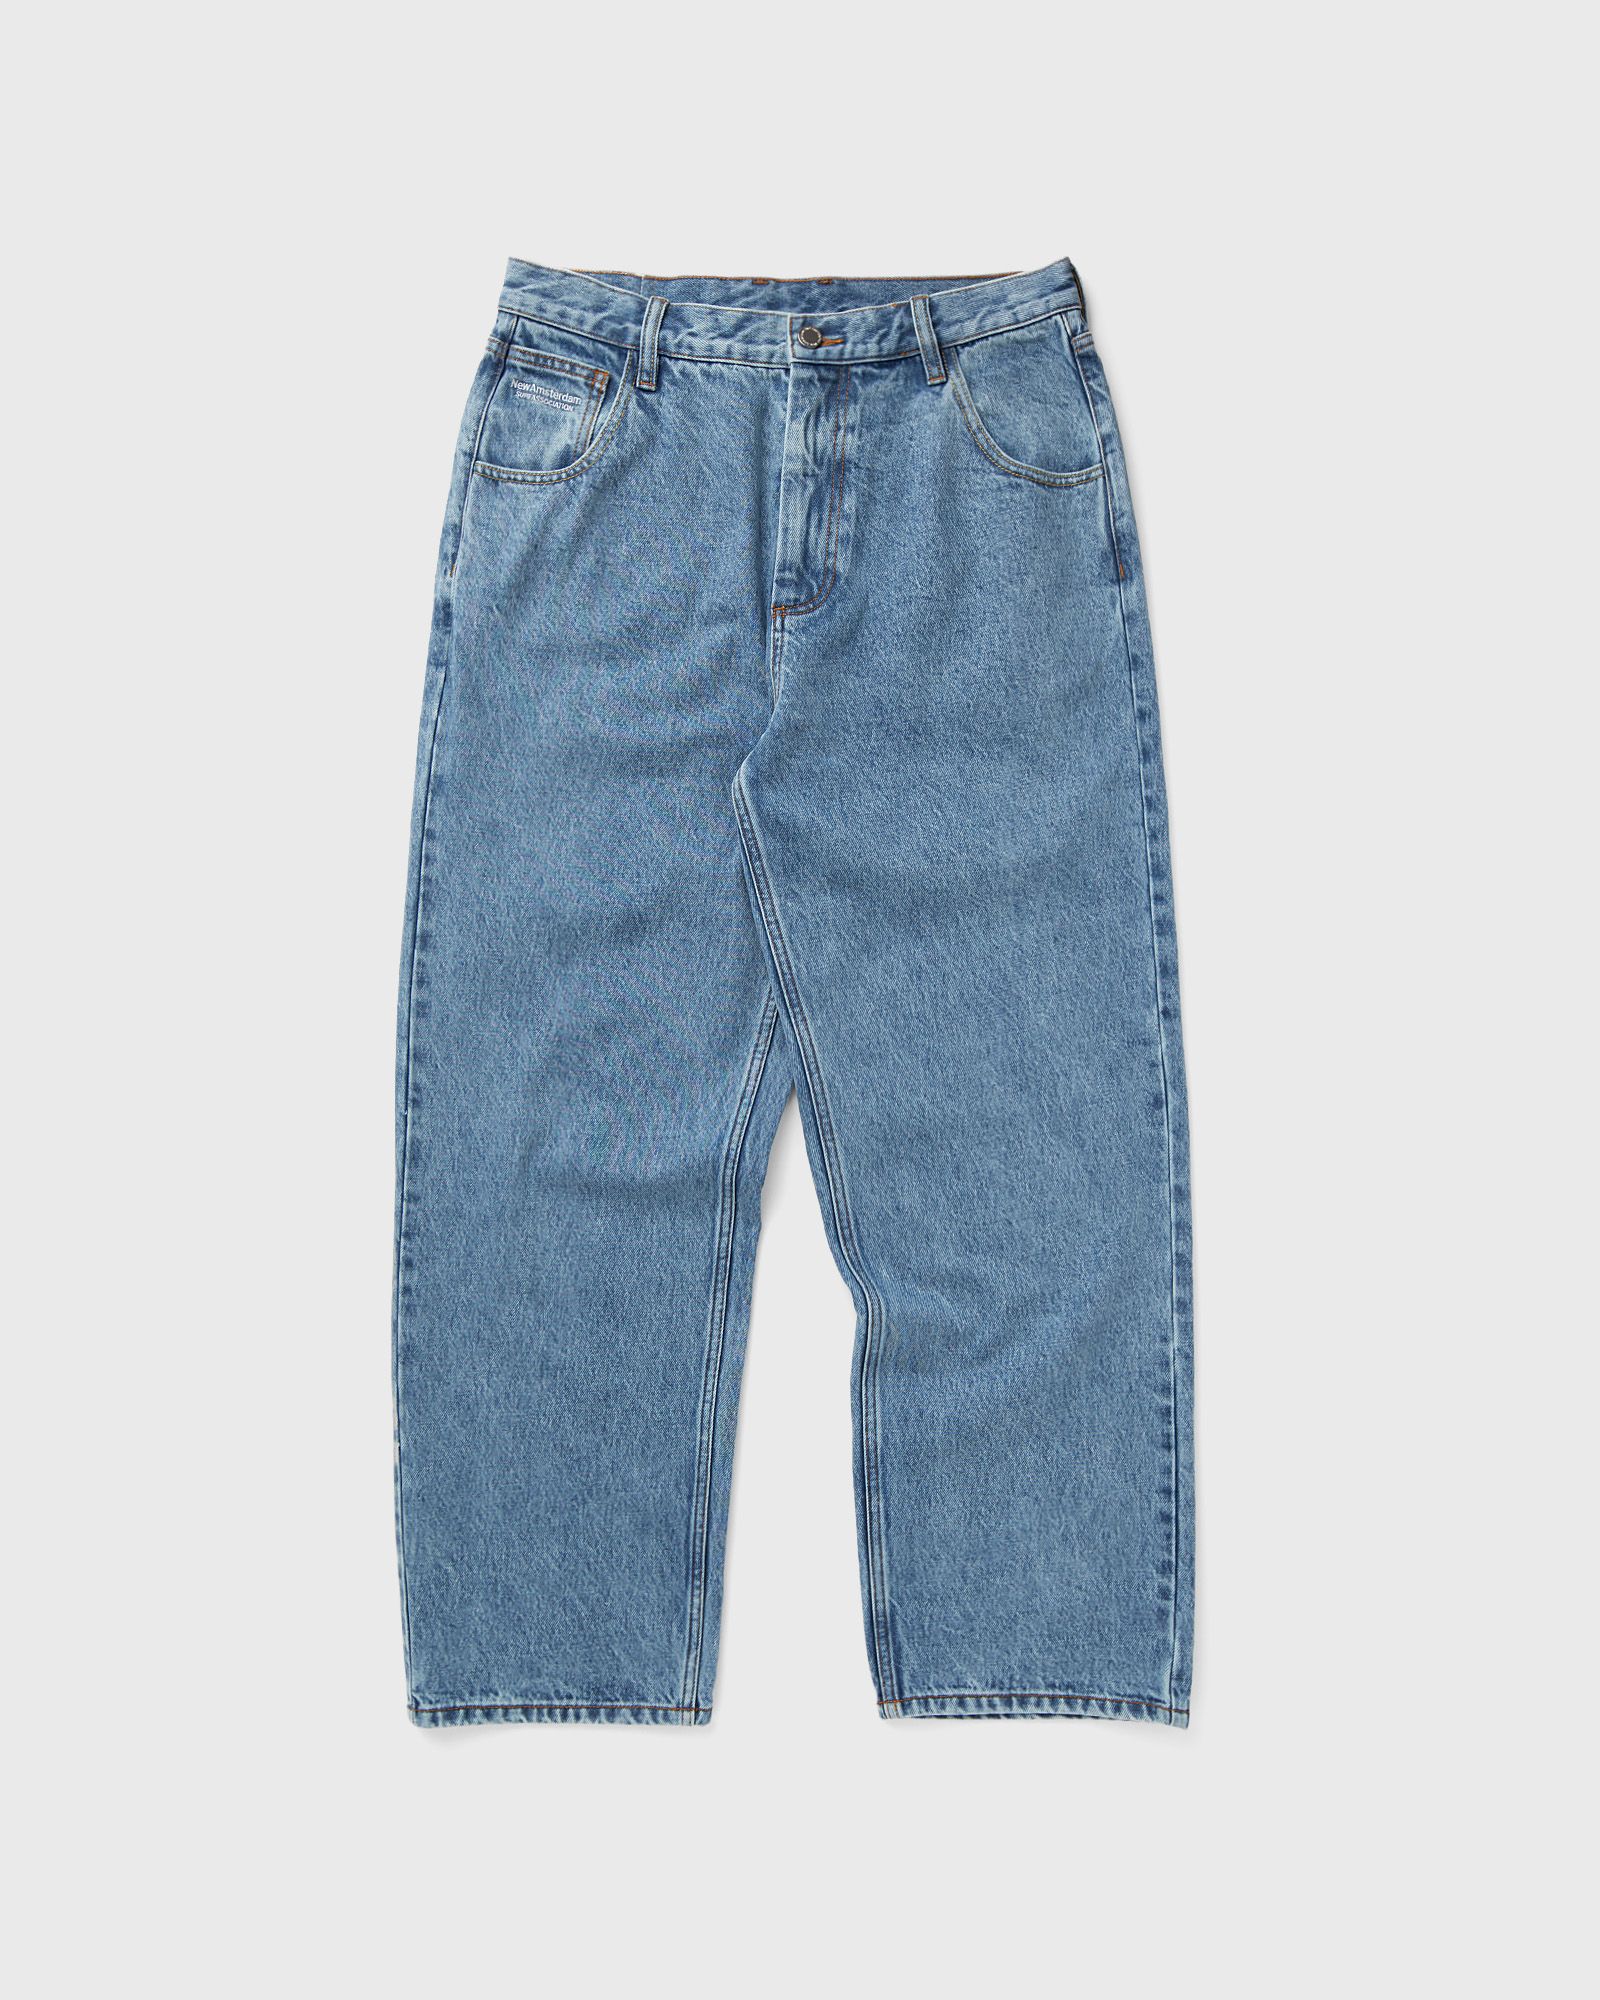 New Amsterdam - 252 denim men jeans blue in größe:l